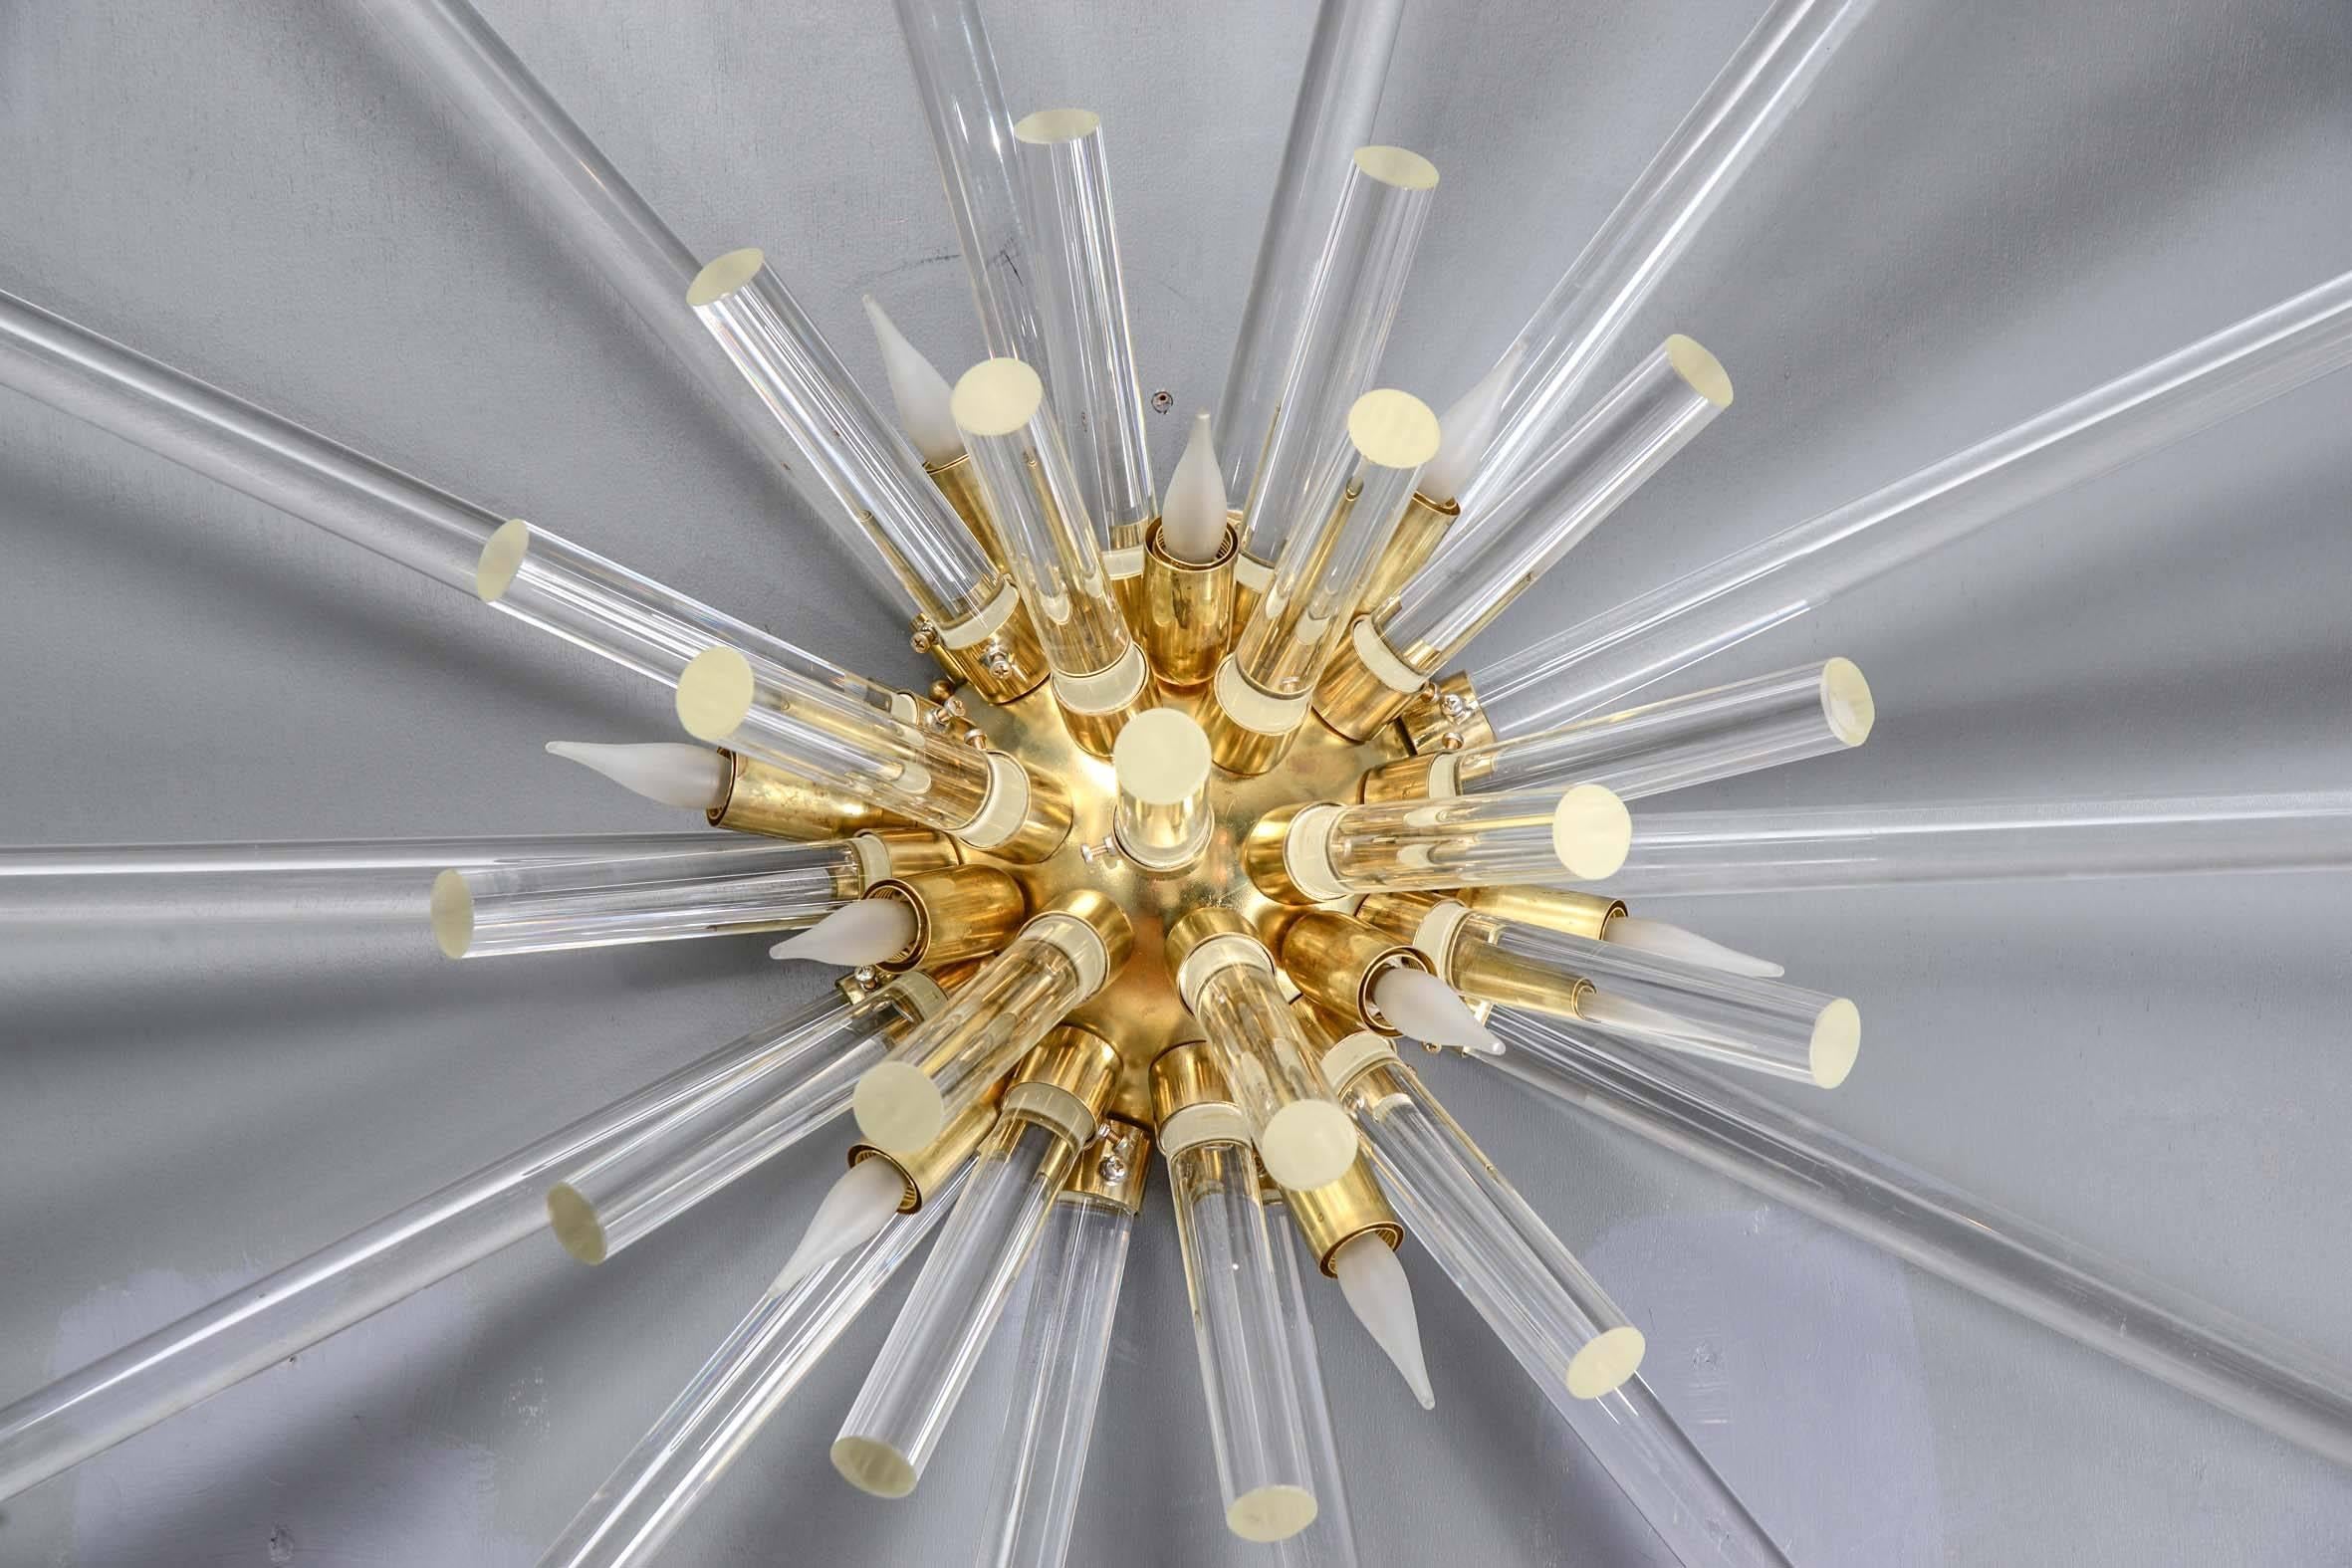 Pair of Sputnik Murano glass tube sconces with nine bulbs per sconce.